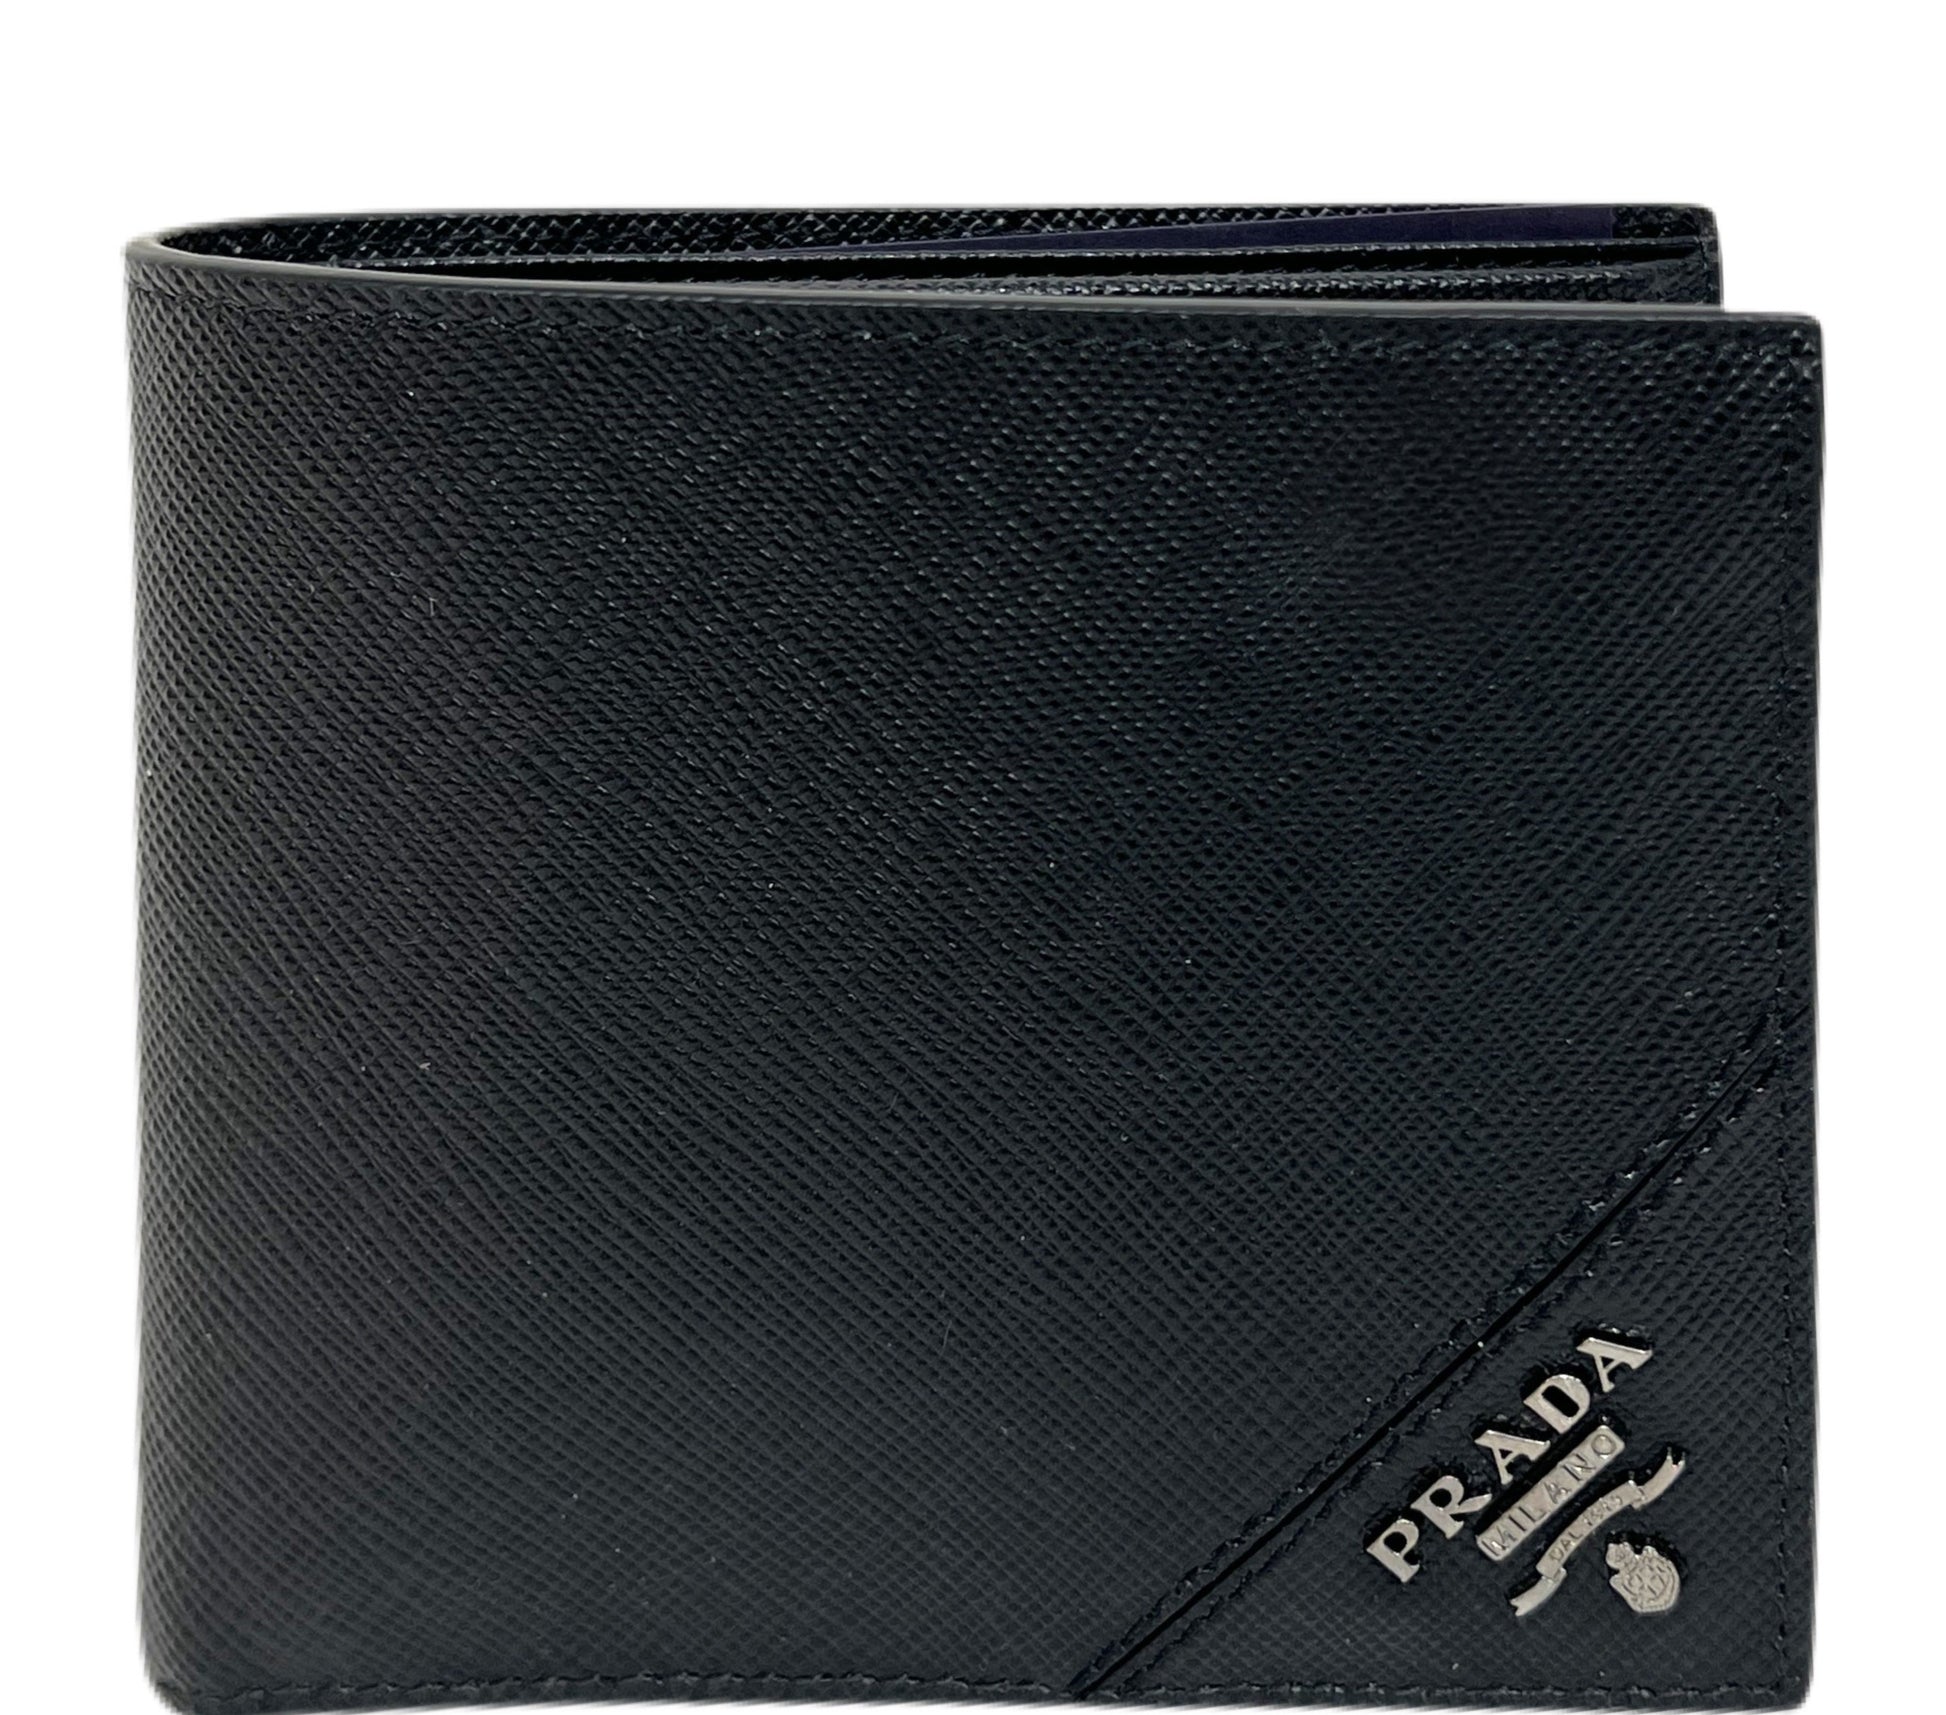 FINAL PRICE - Prada Saffiano Leather Wallet for Men - Black